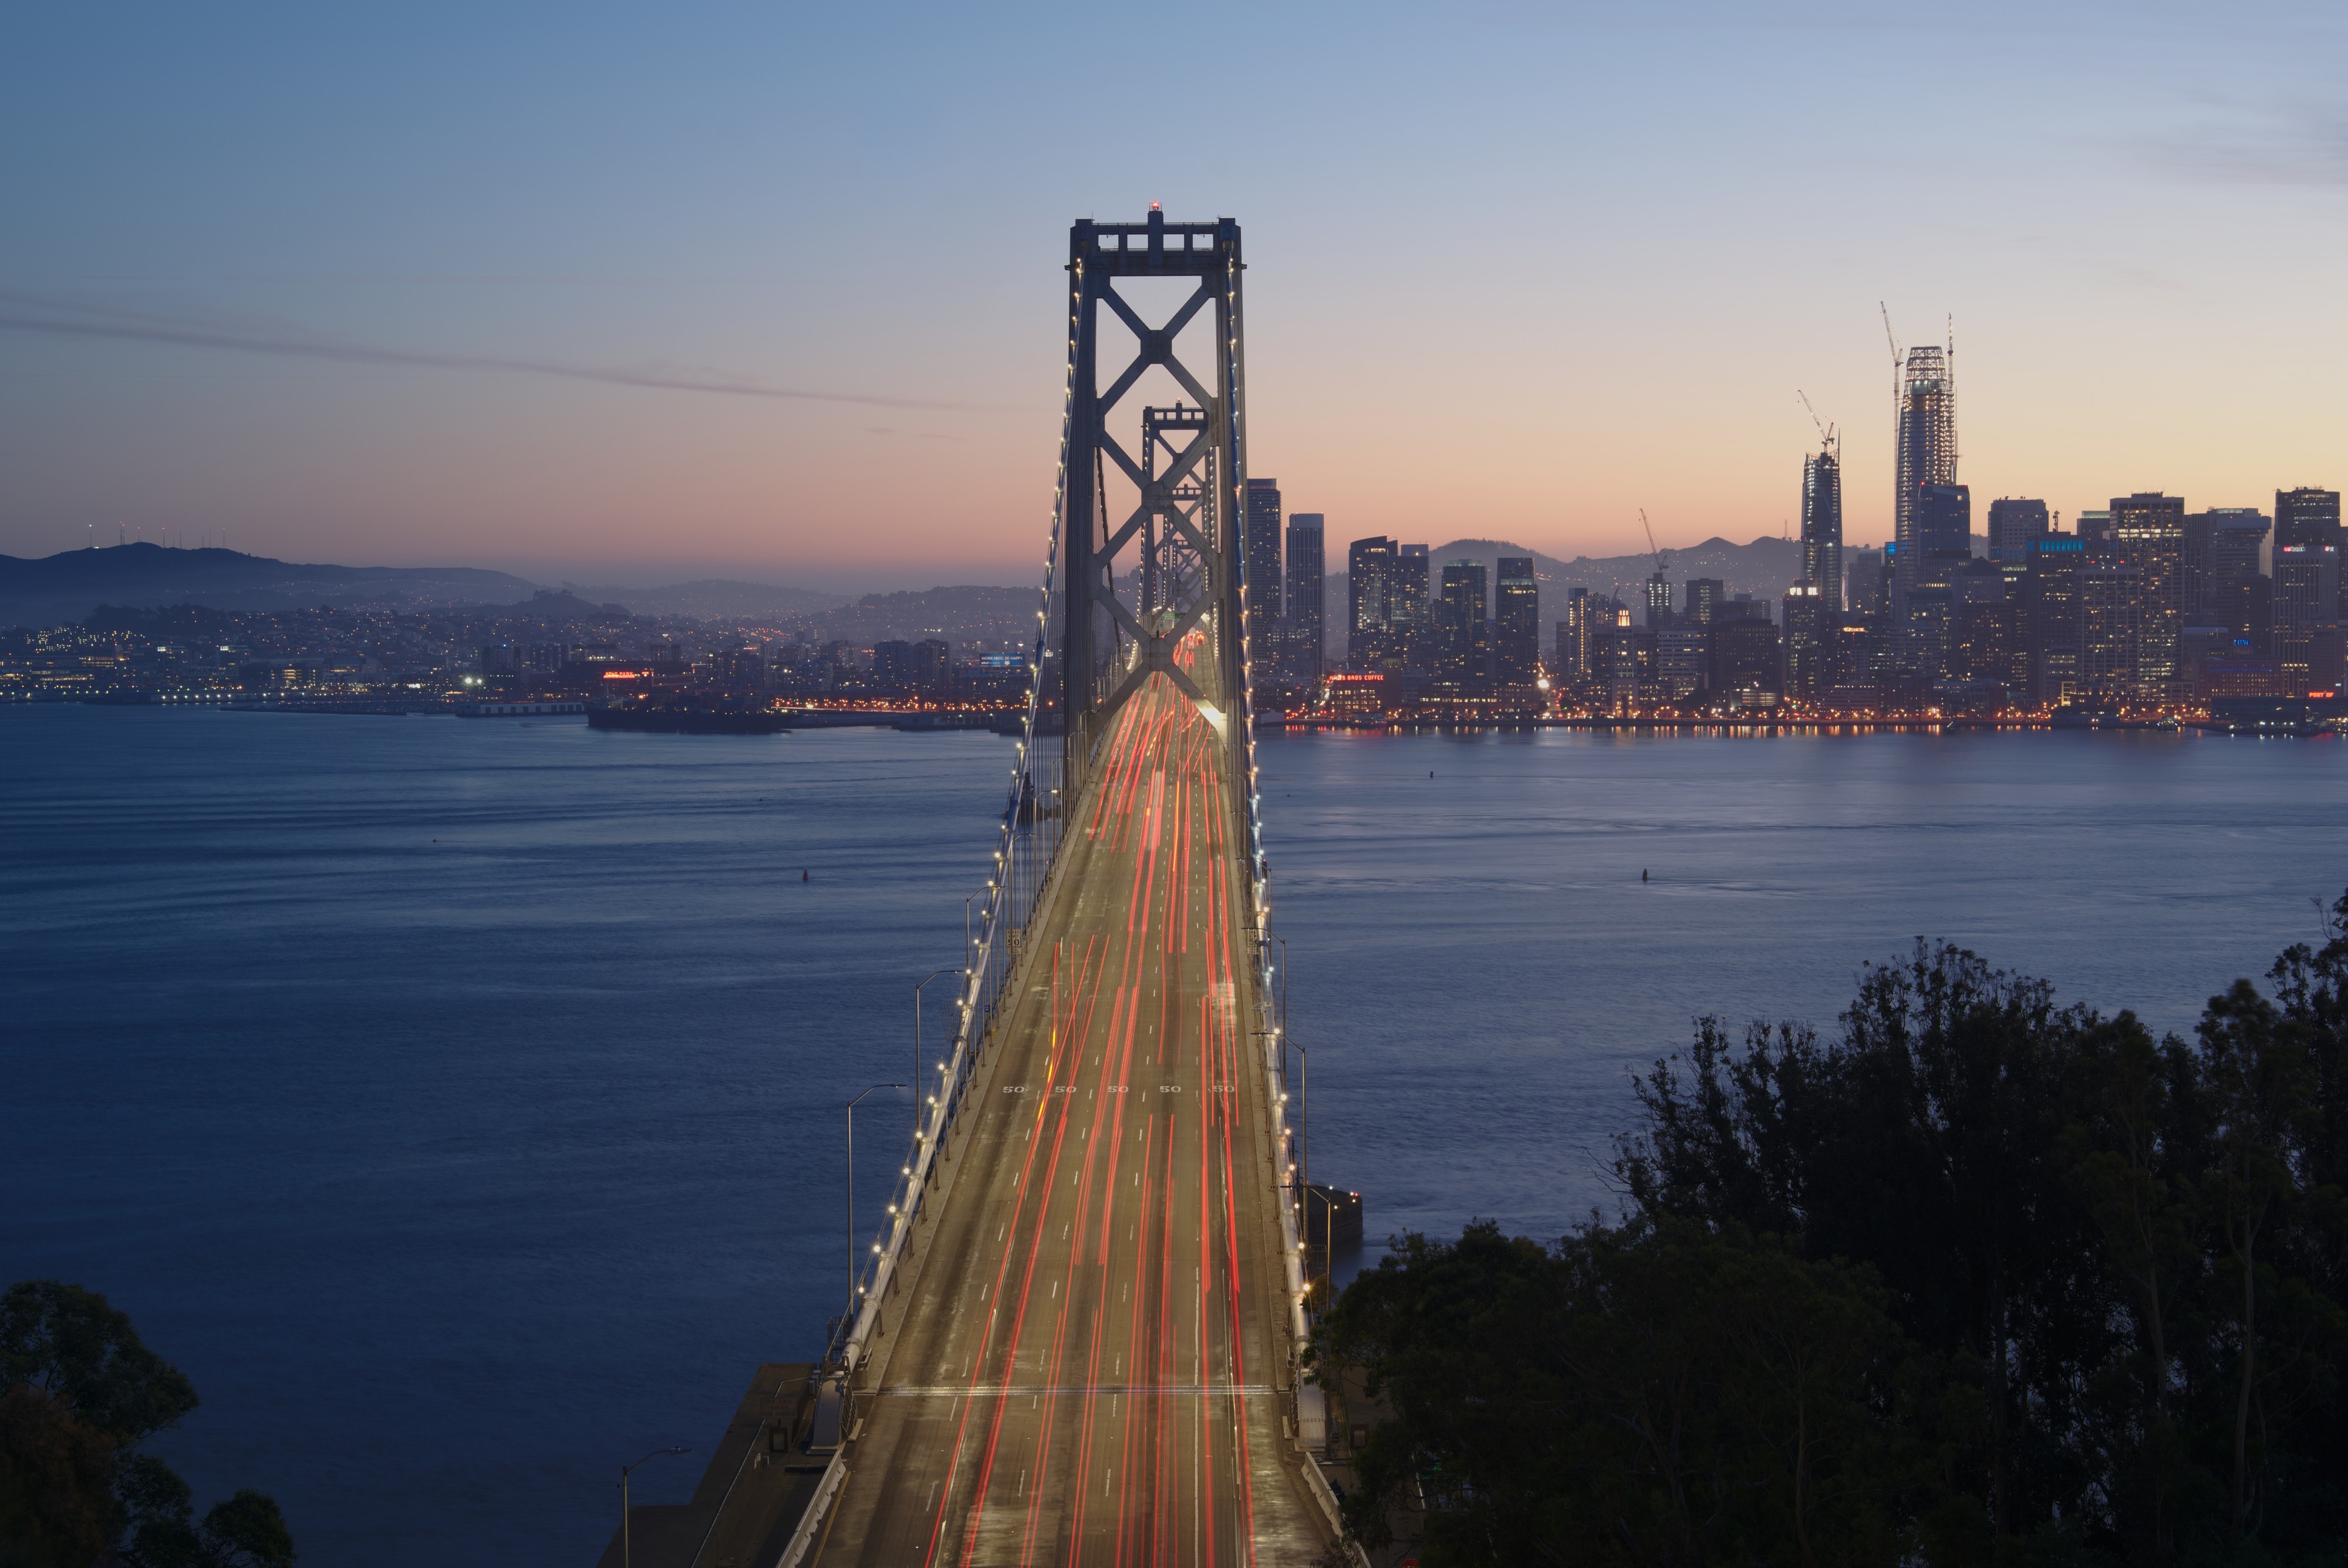 Western Span of the San Francisco-Oakland Bay Bridge at dusk, seen from Yerba Buena Island